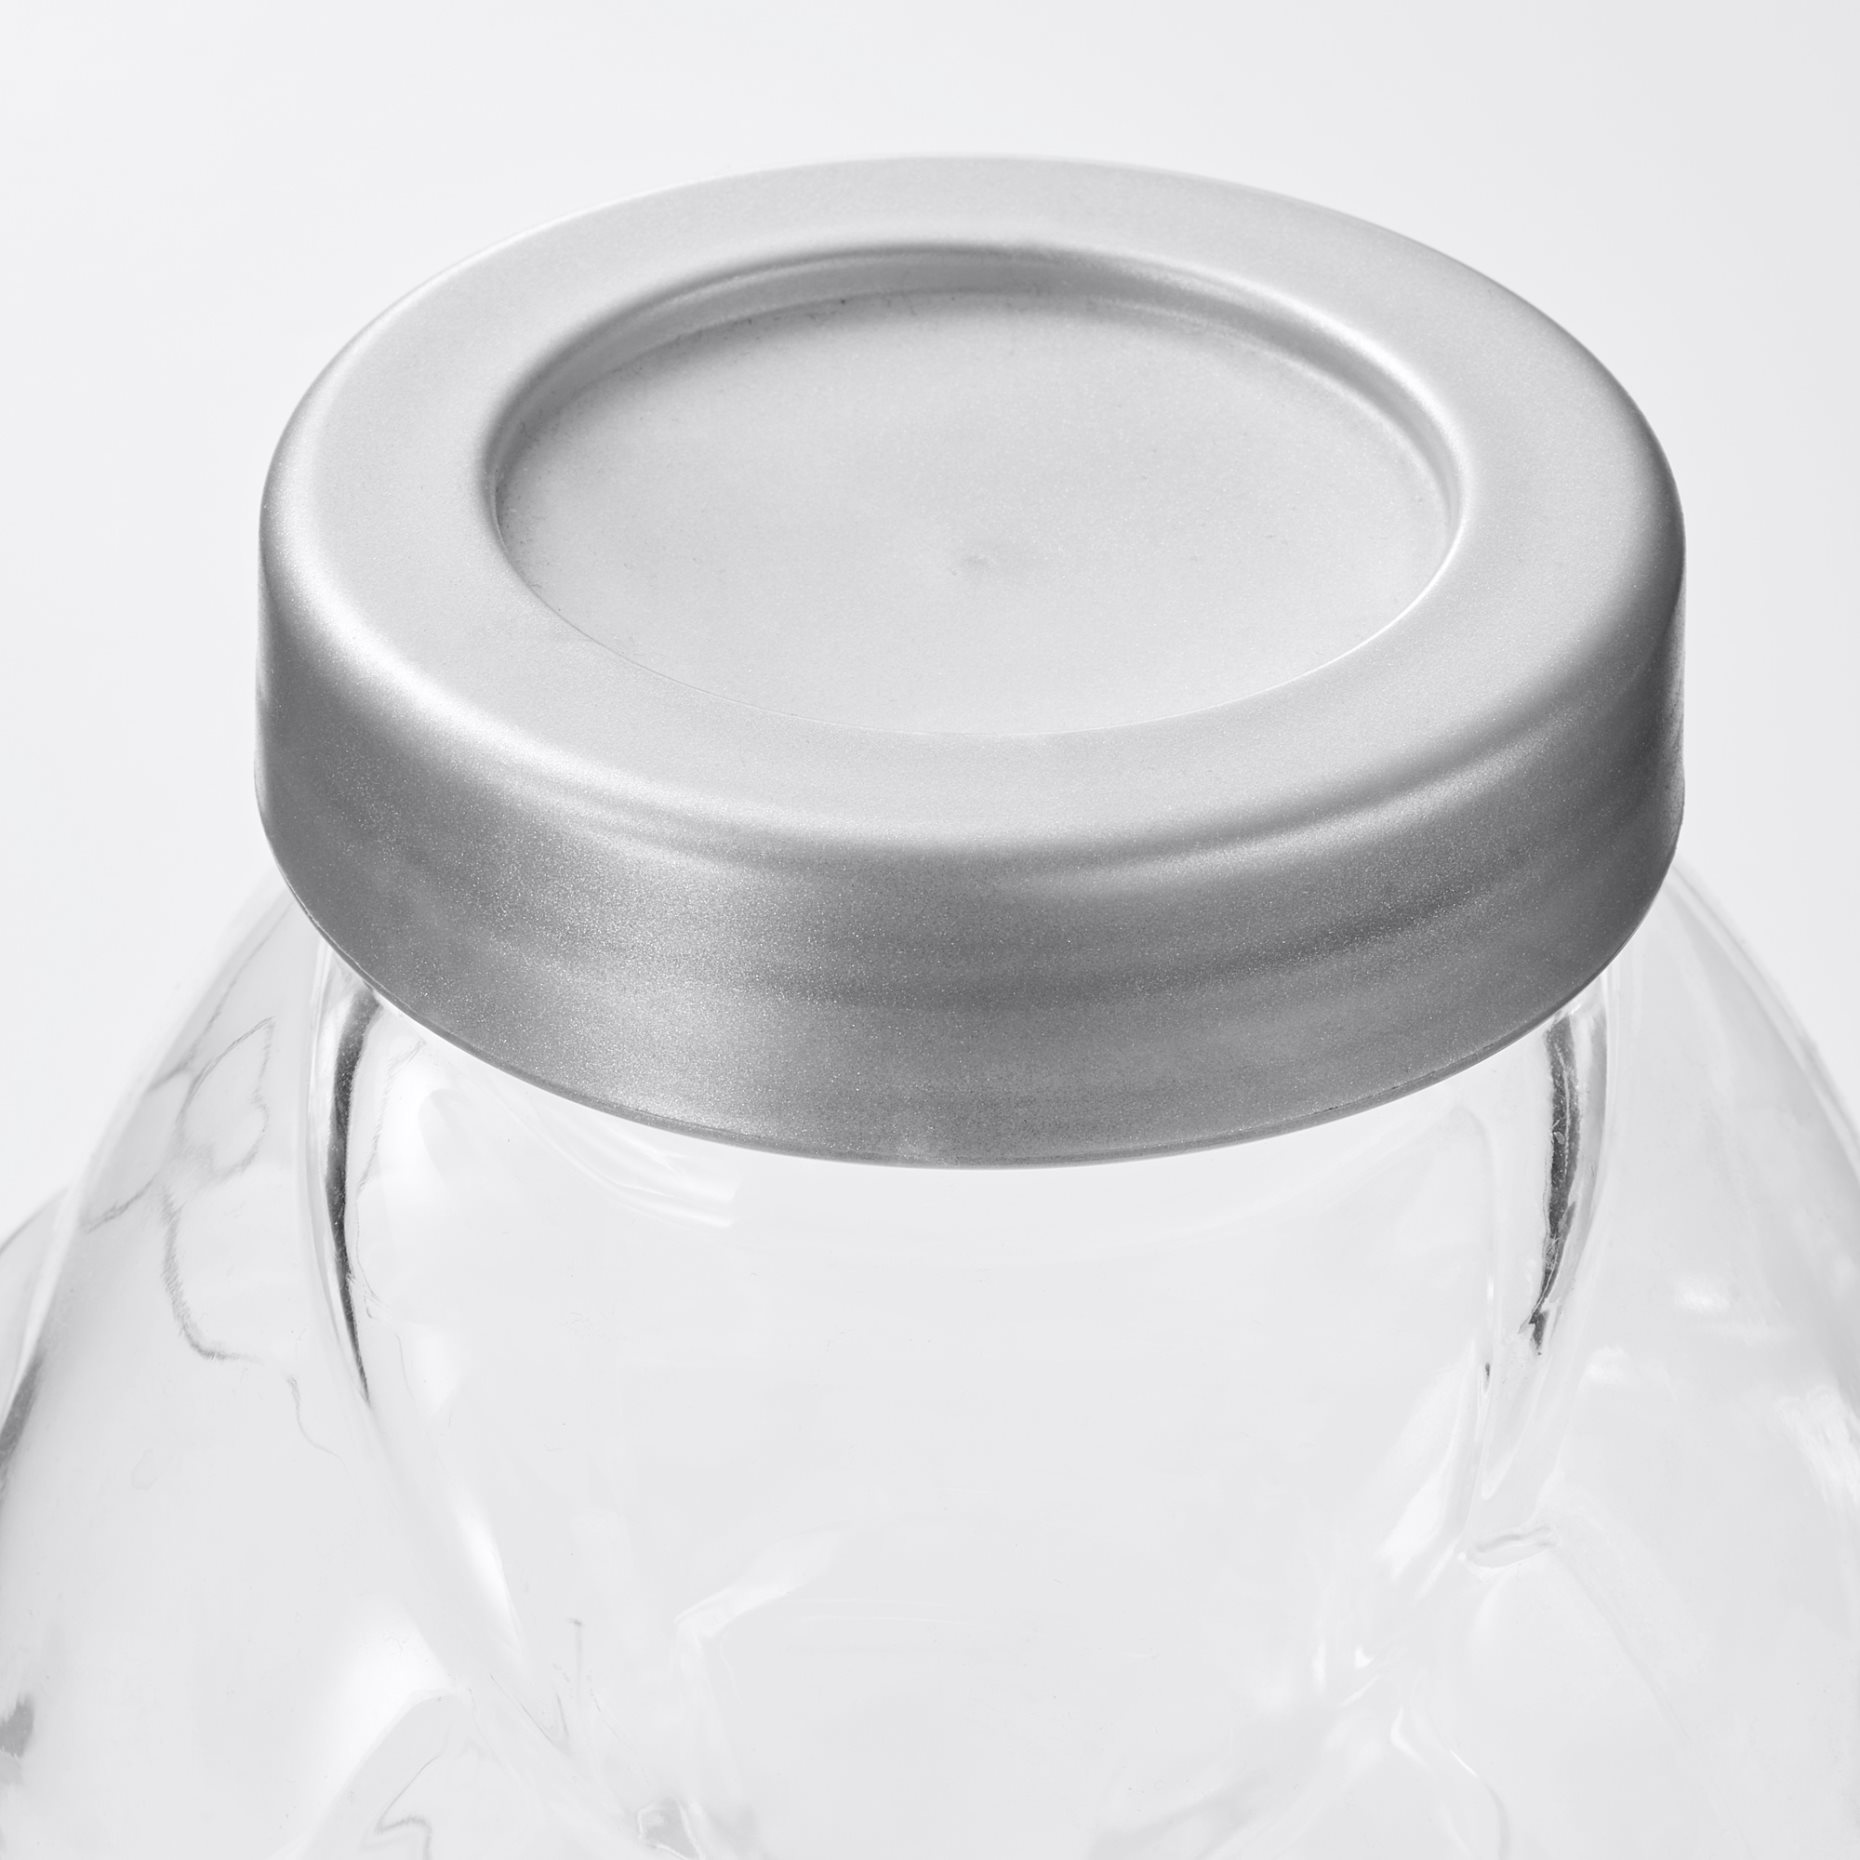 FÖRVAR, jar with lid, 000.302.62